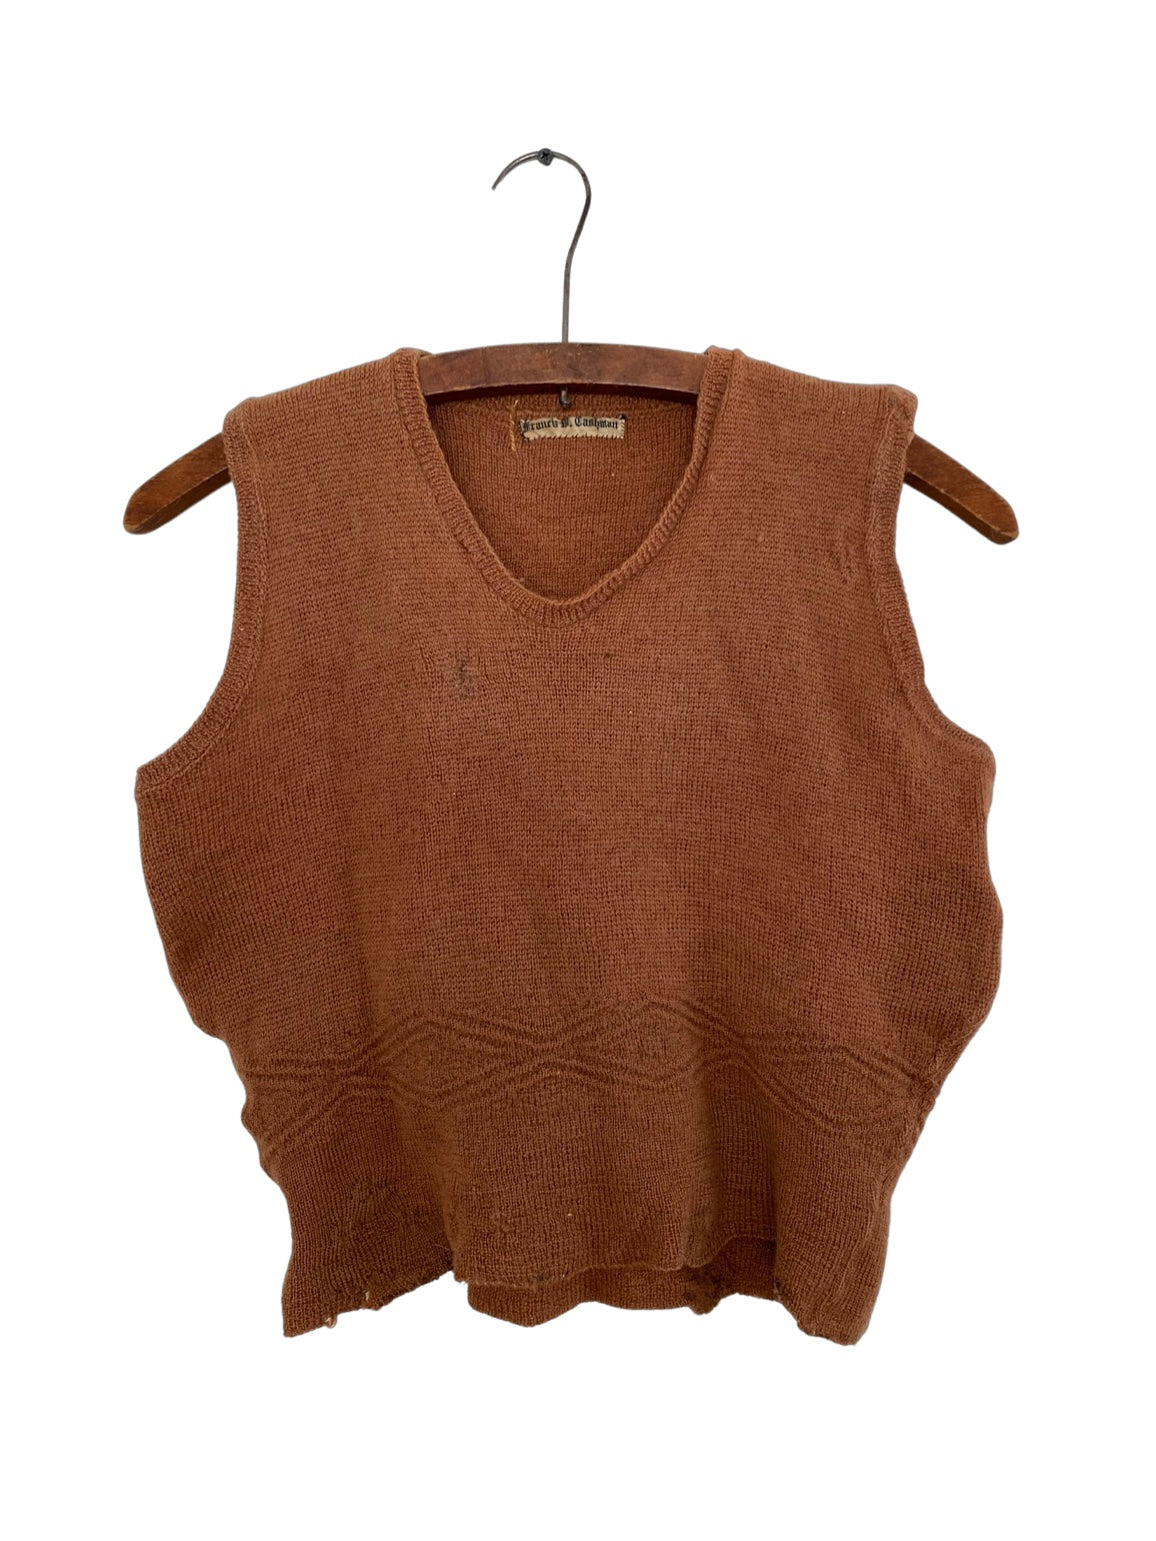 1940s Handmade Sweater Vest